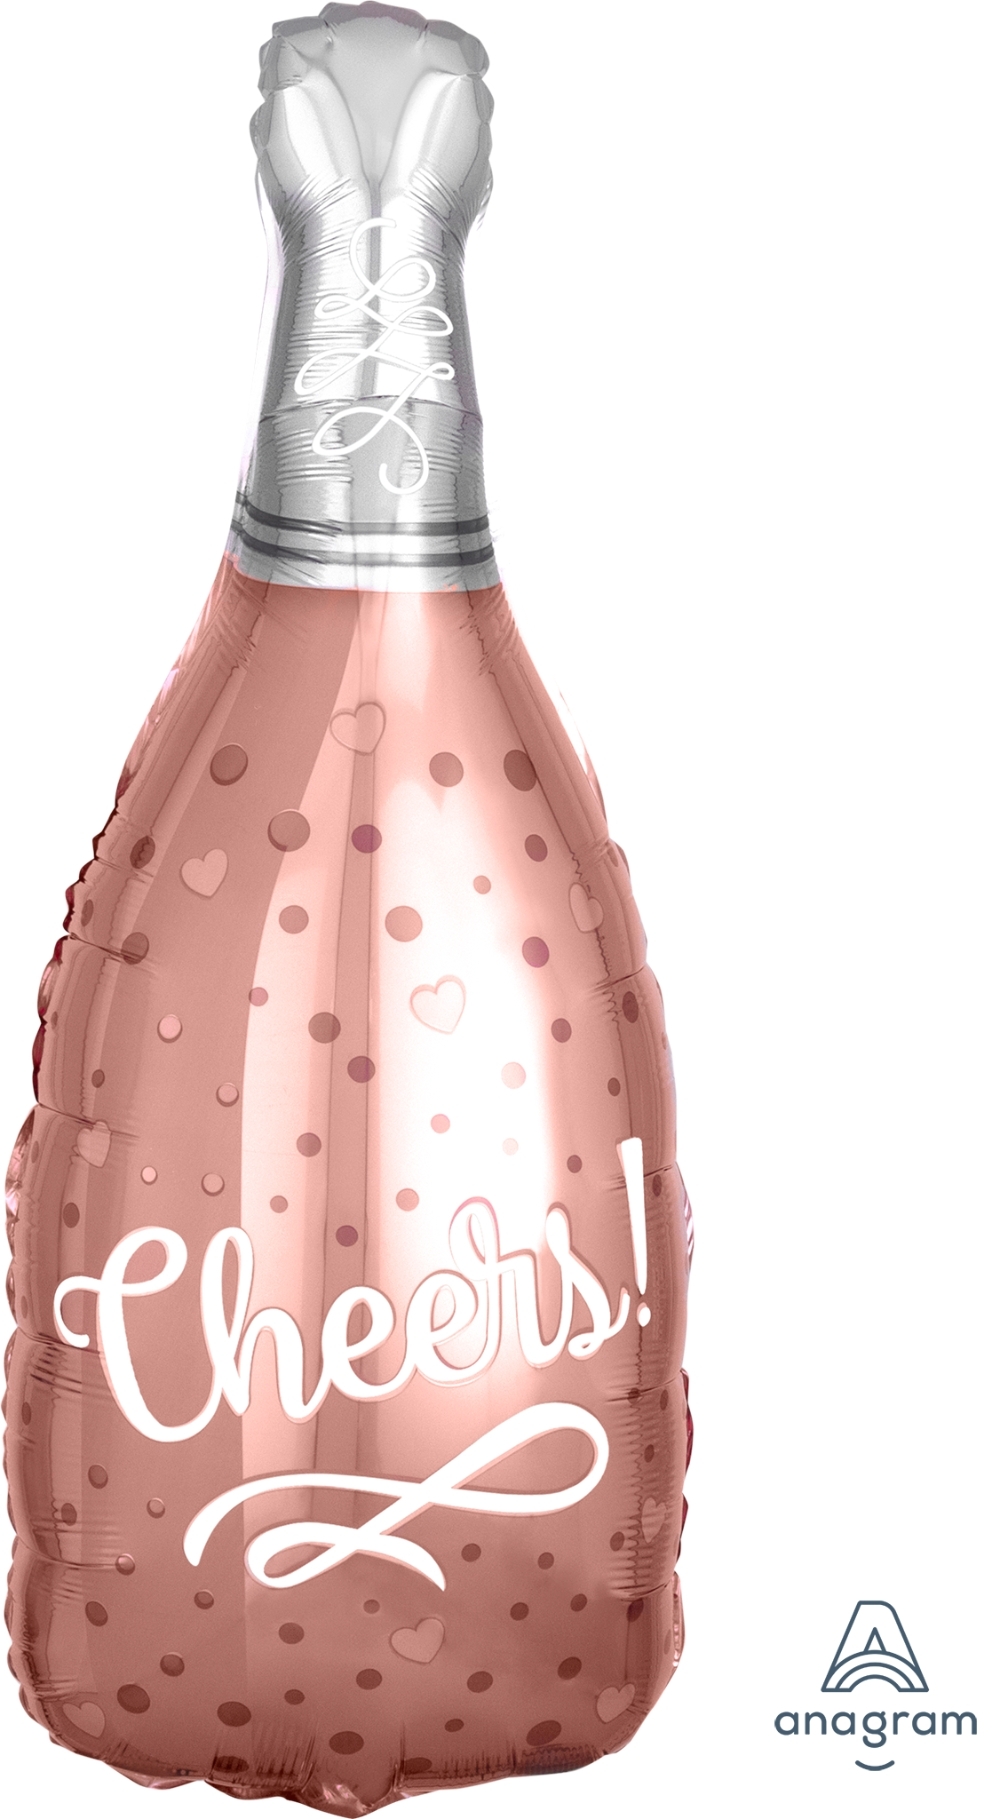 Cheers Rose Bottle Supershape balloon